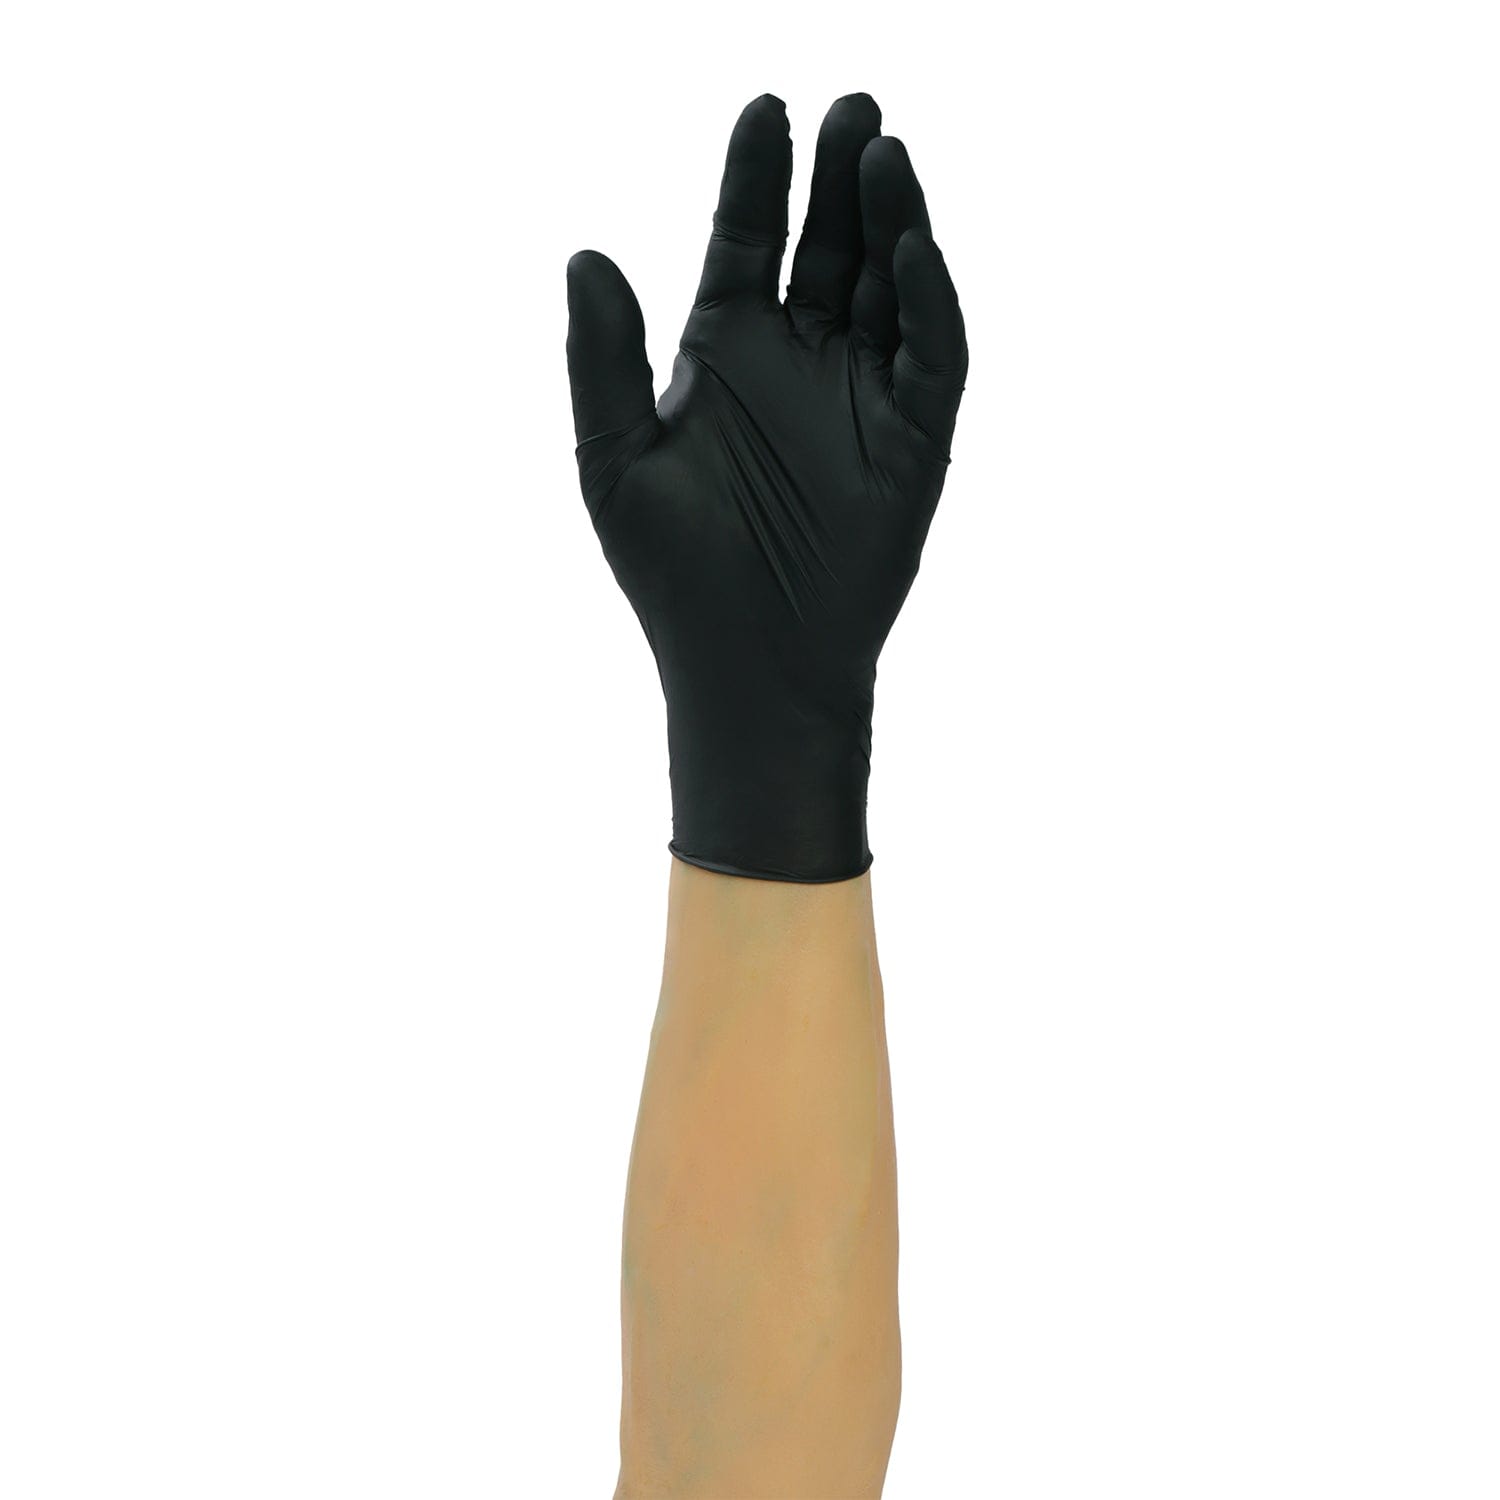 Black Verge Powder Free Nitrile Gloves, Case of 1,000